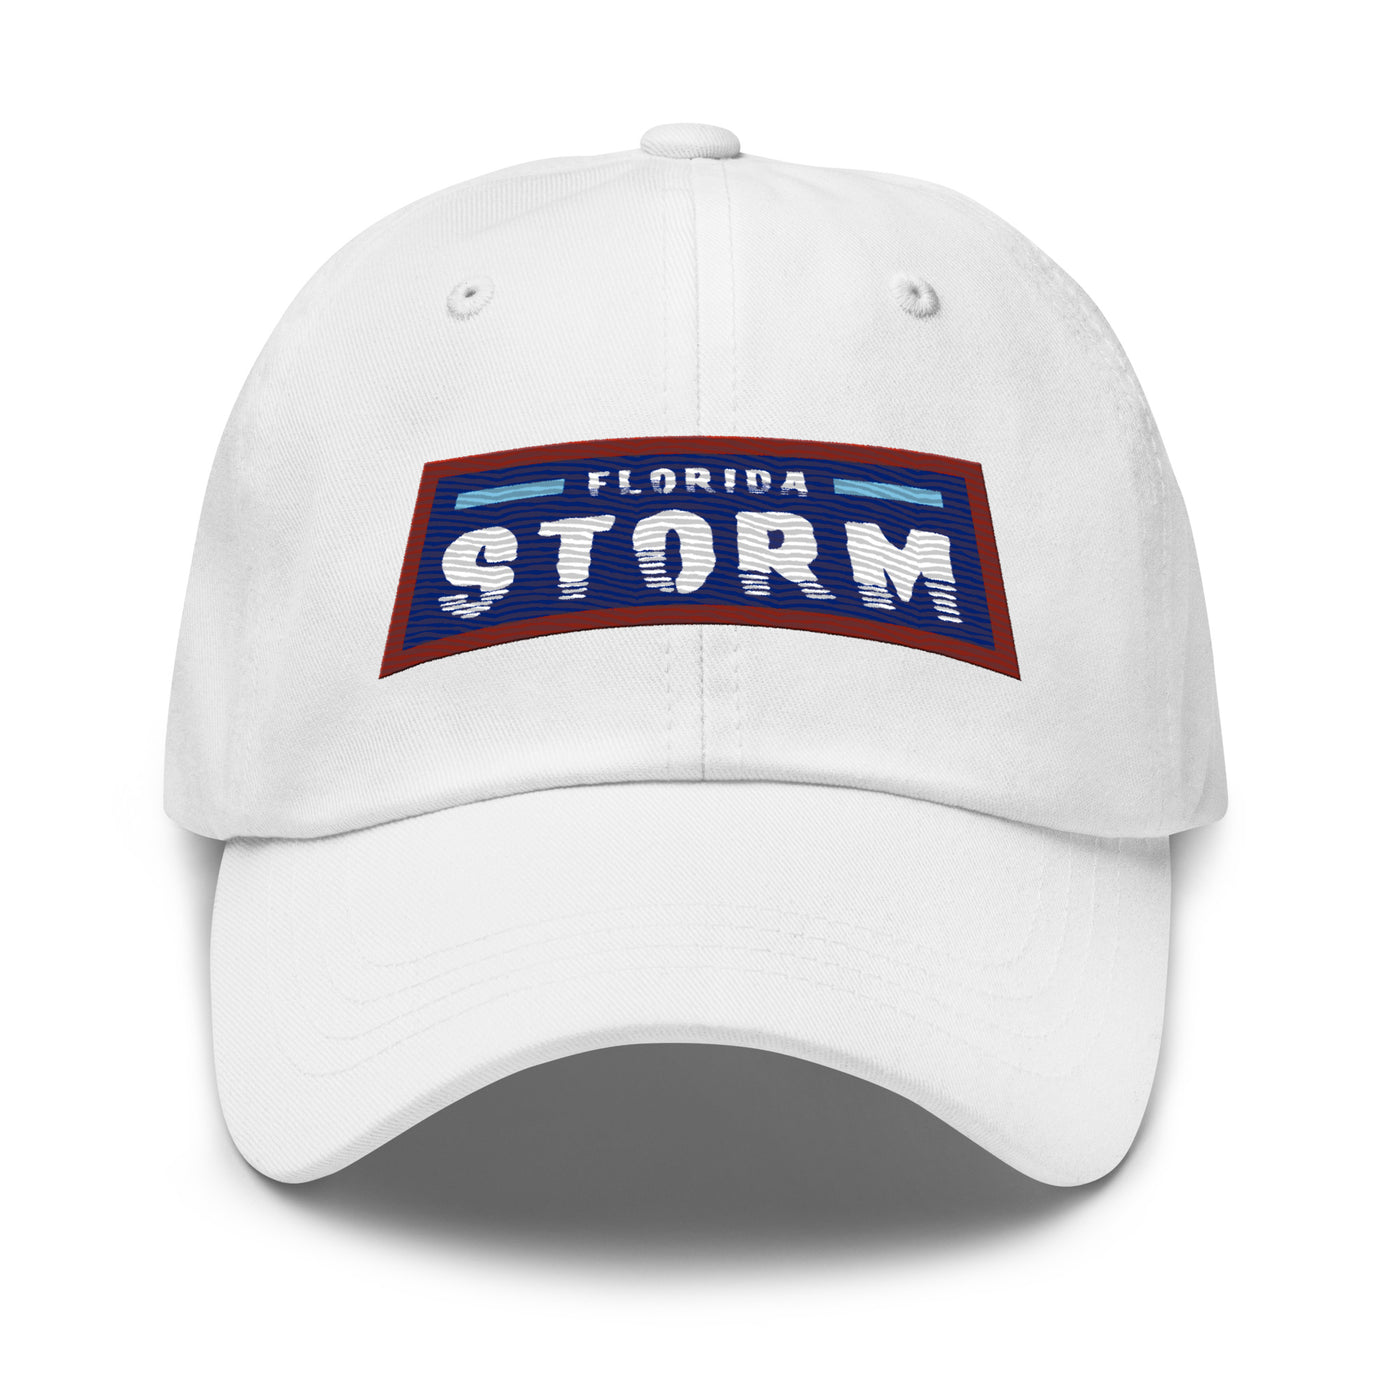 Florida Storm Dad hat